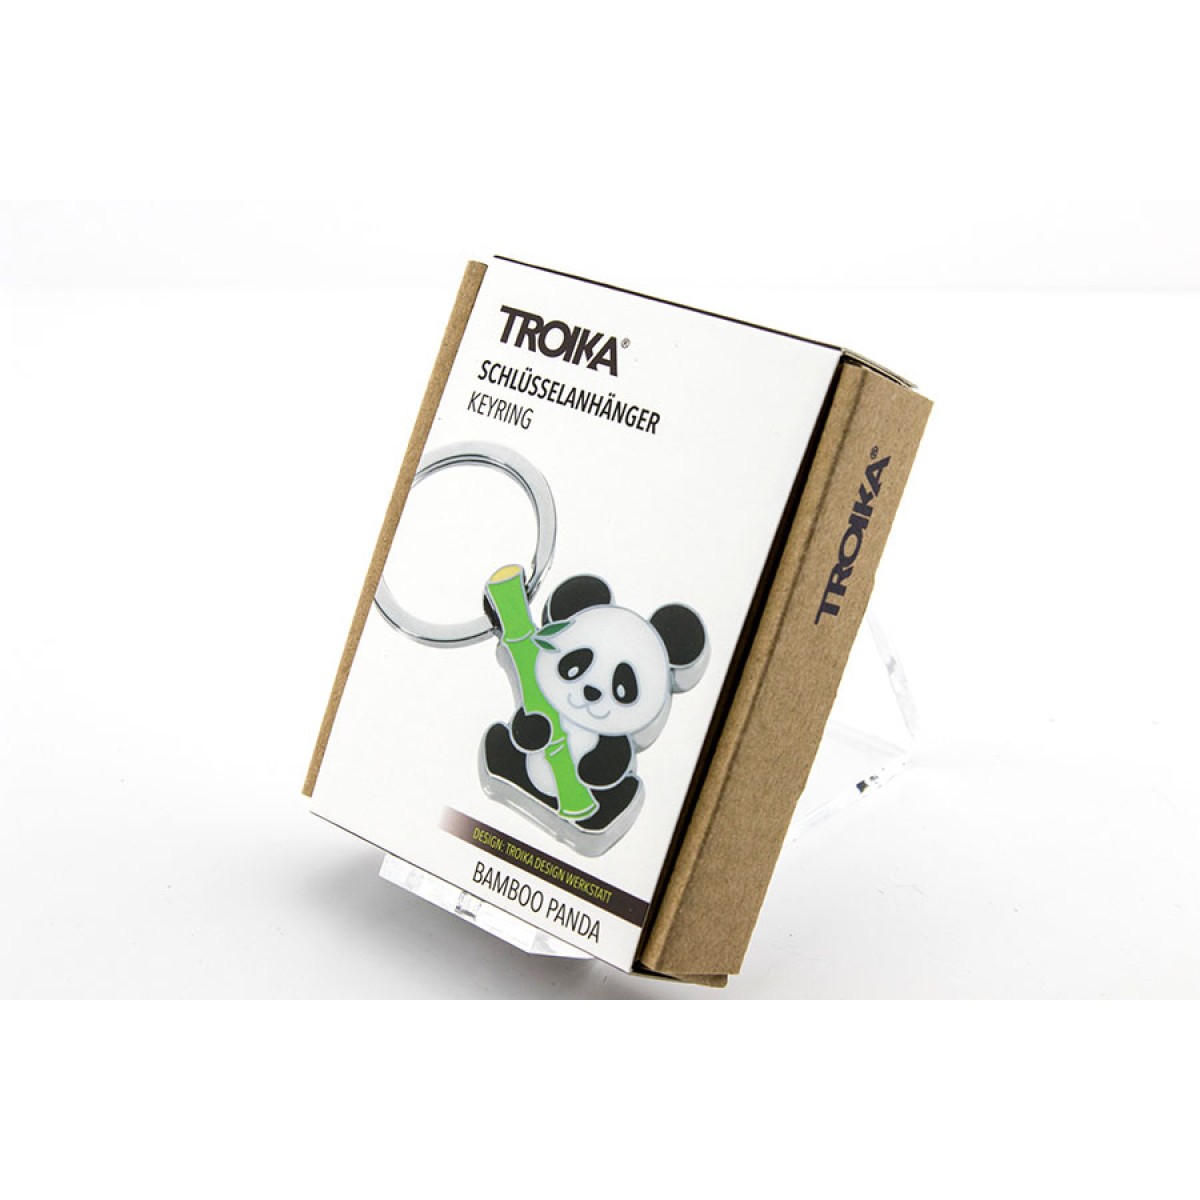 Troika - Keyring - Bamboo Panda